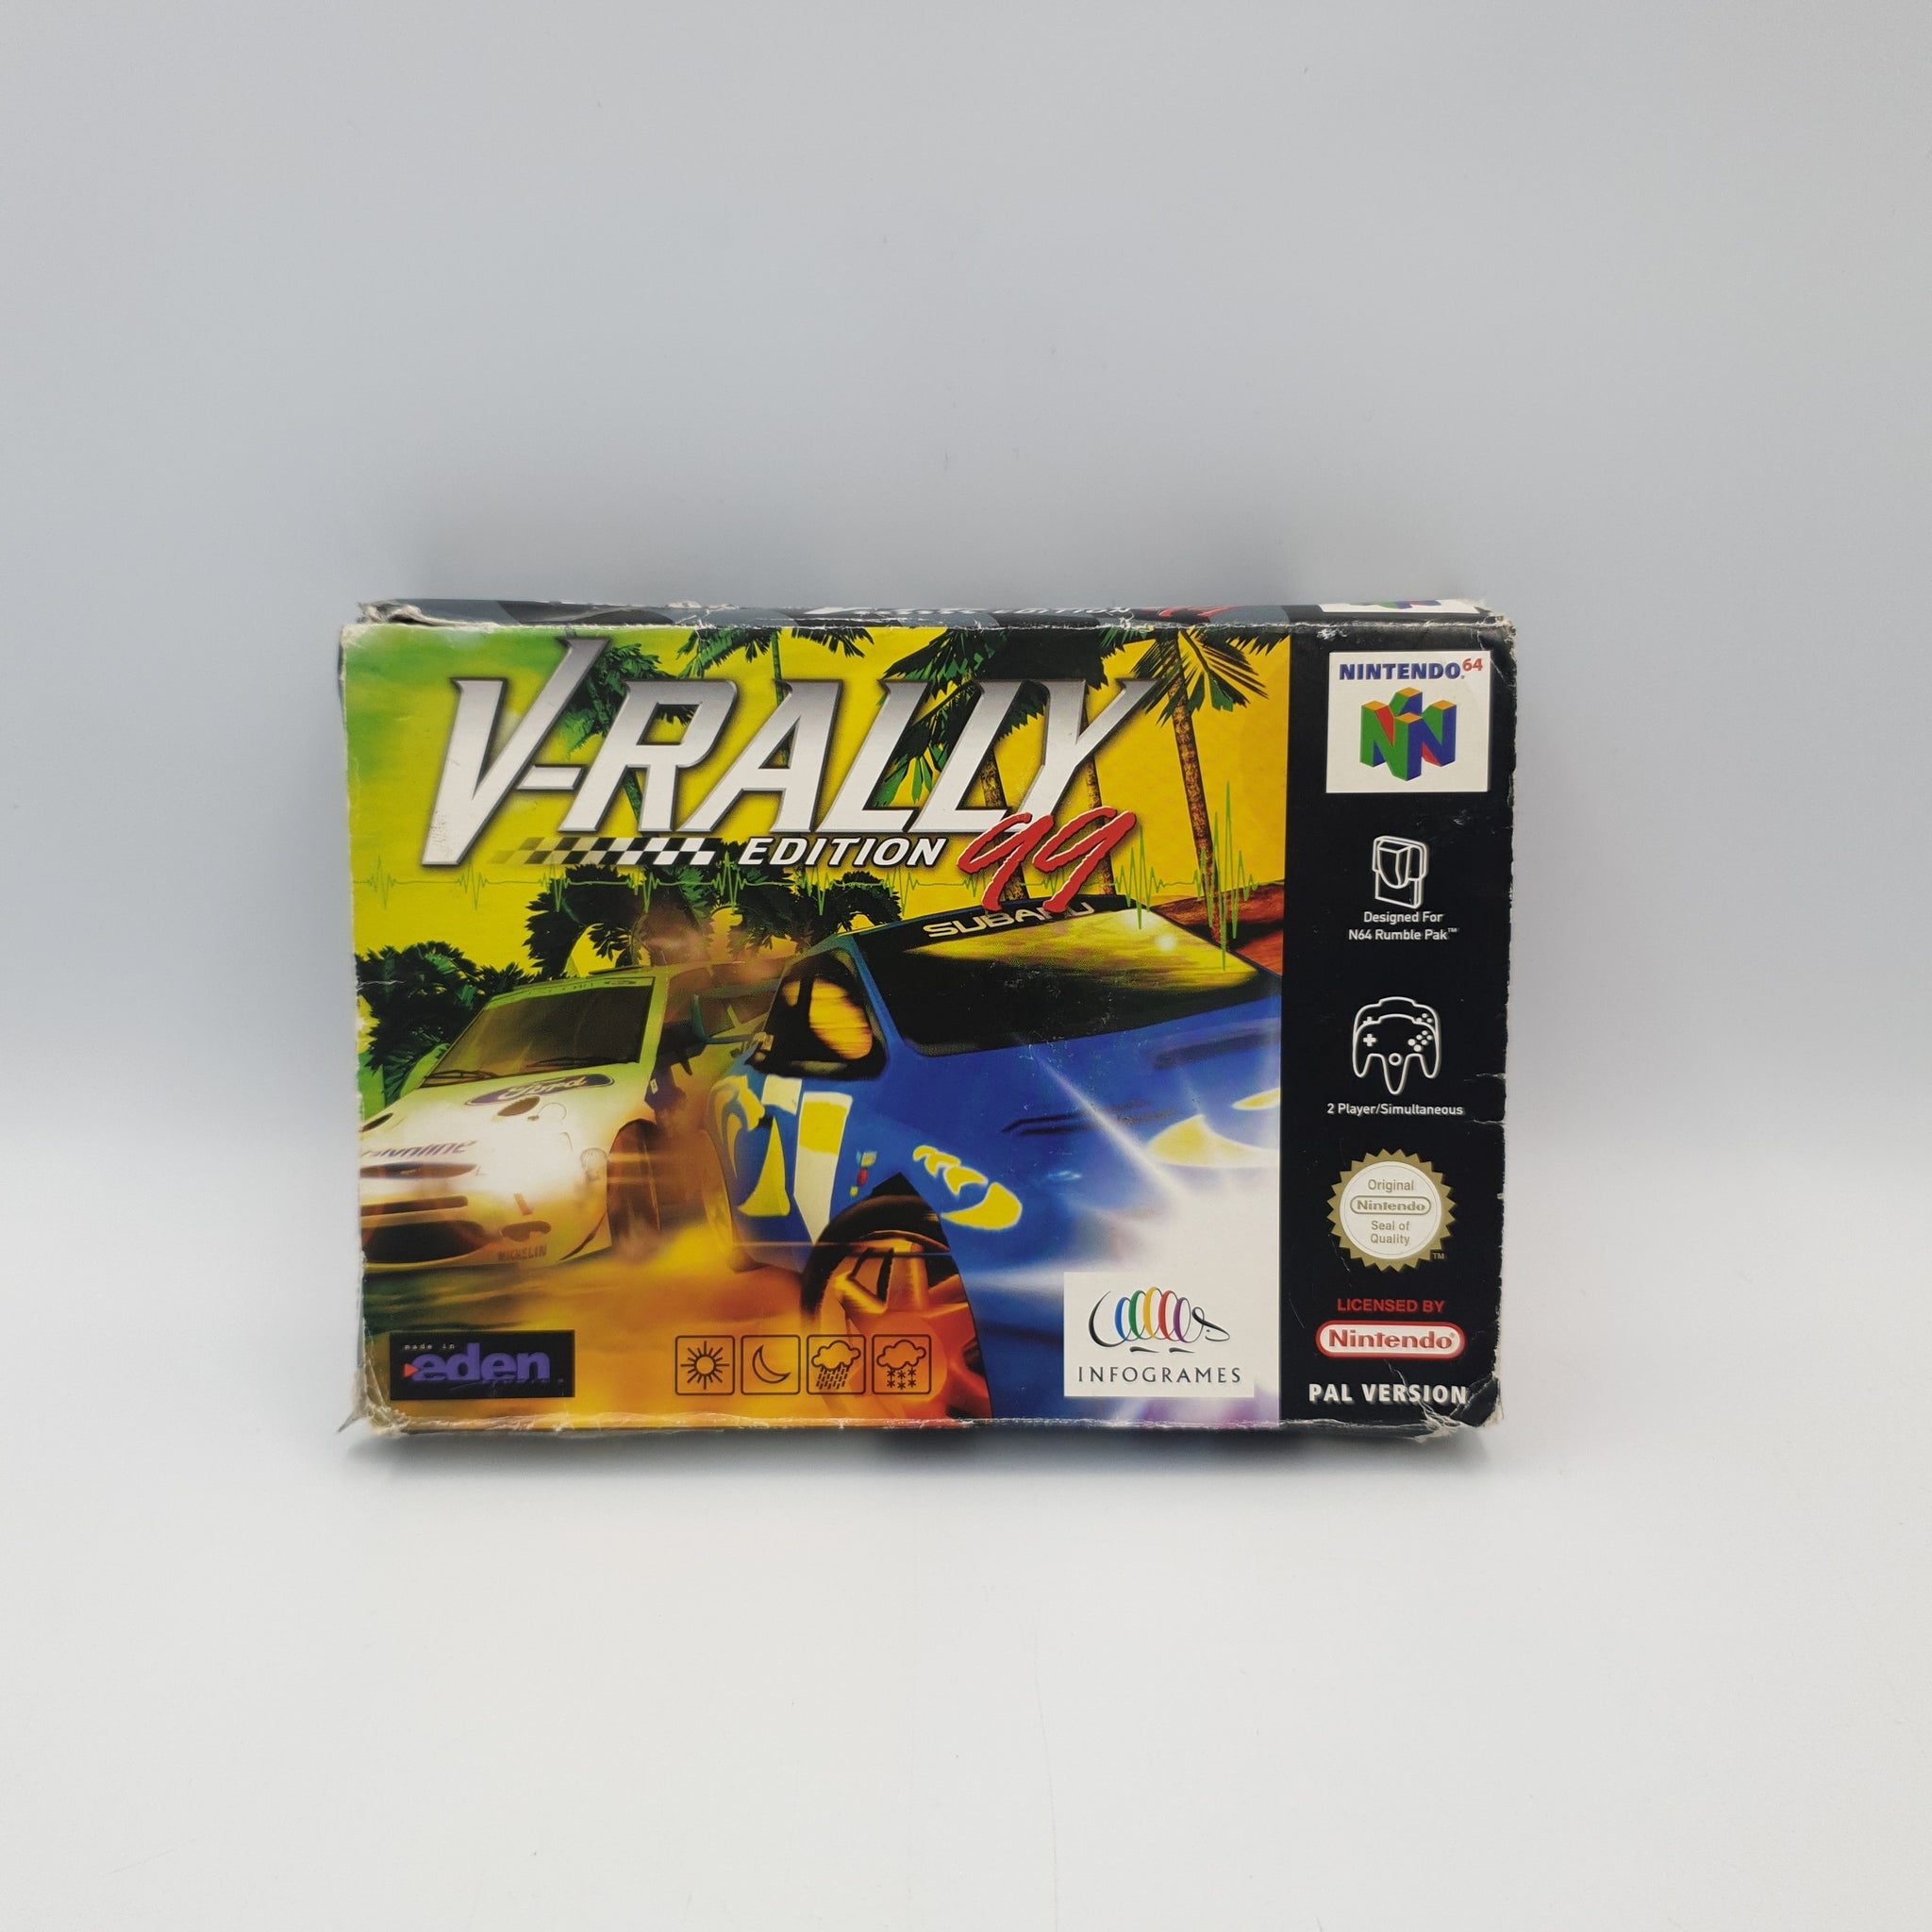 V-RALLY N64